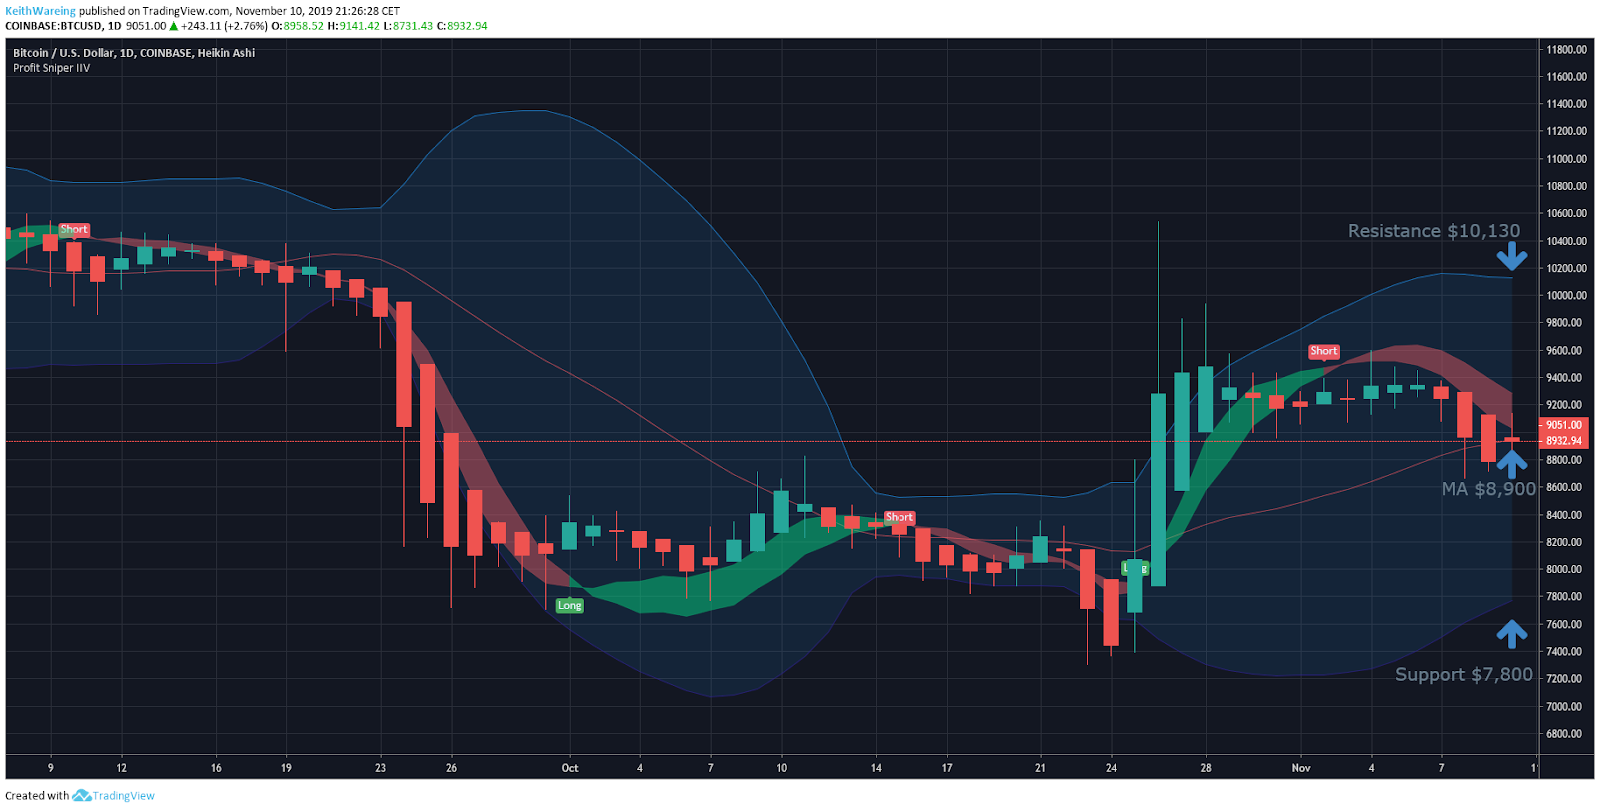 BTC USD daily chart. Source: TradingView